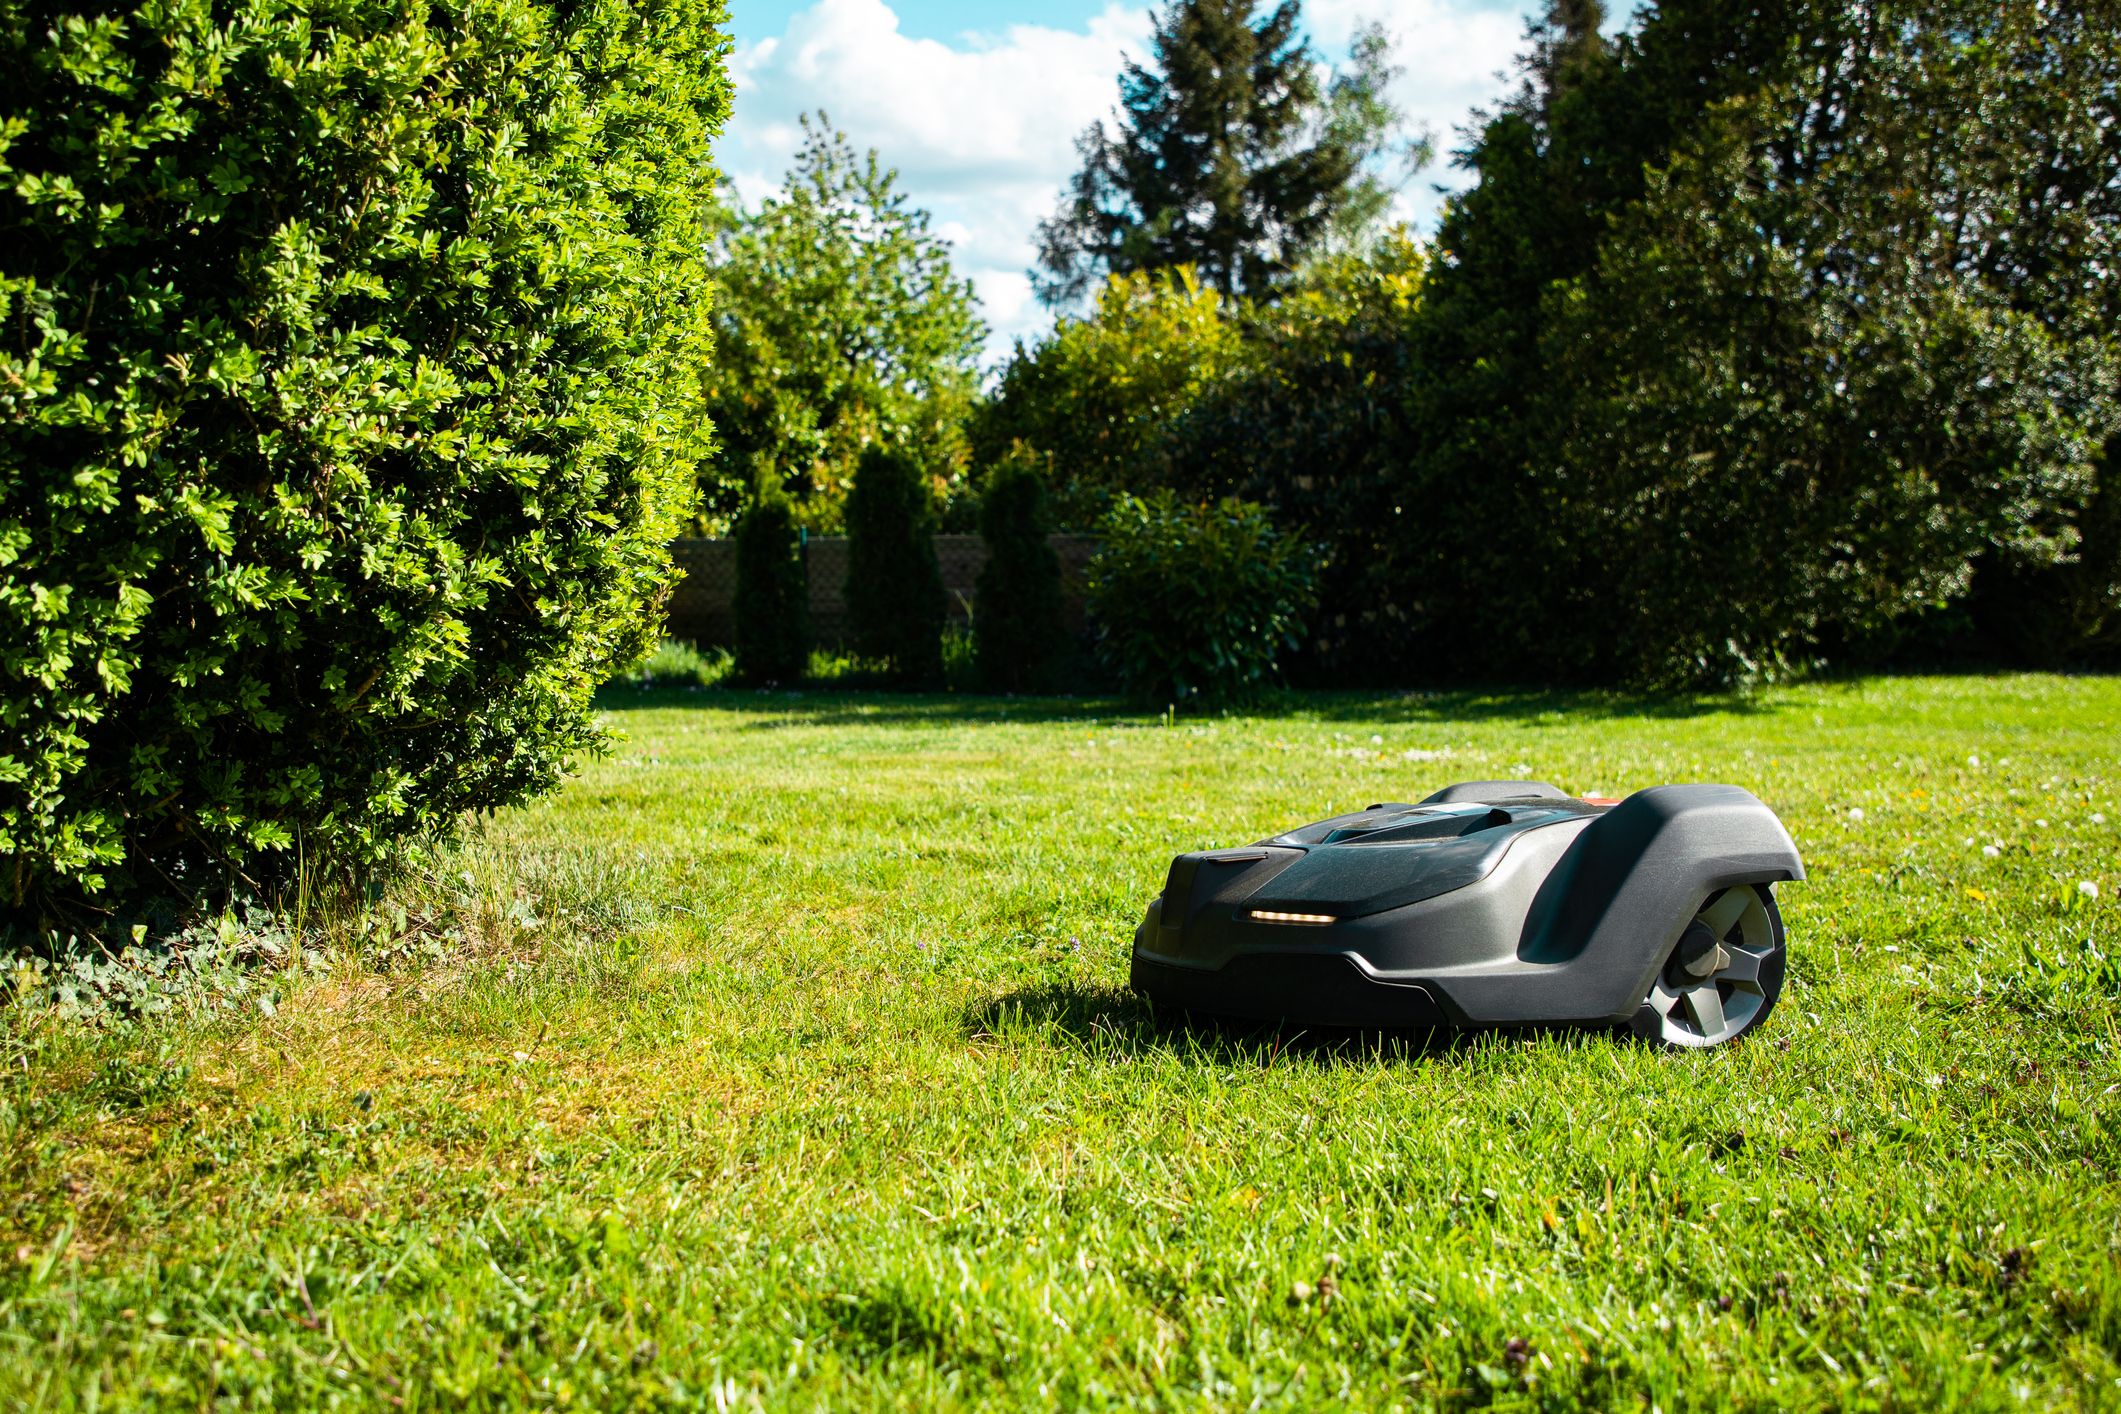 8 Best Robot Lawn Mowers To Buy In 2022